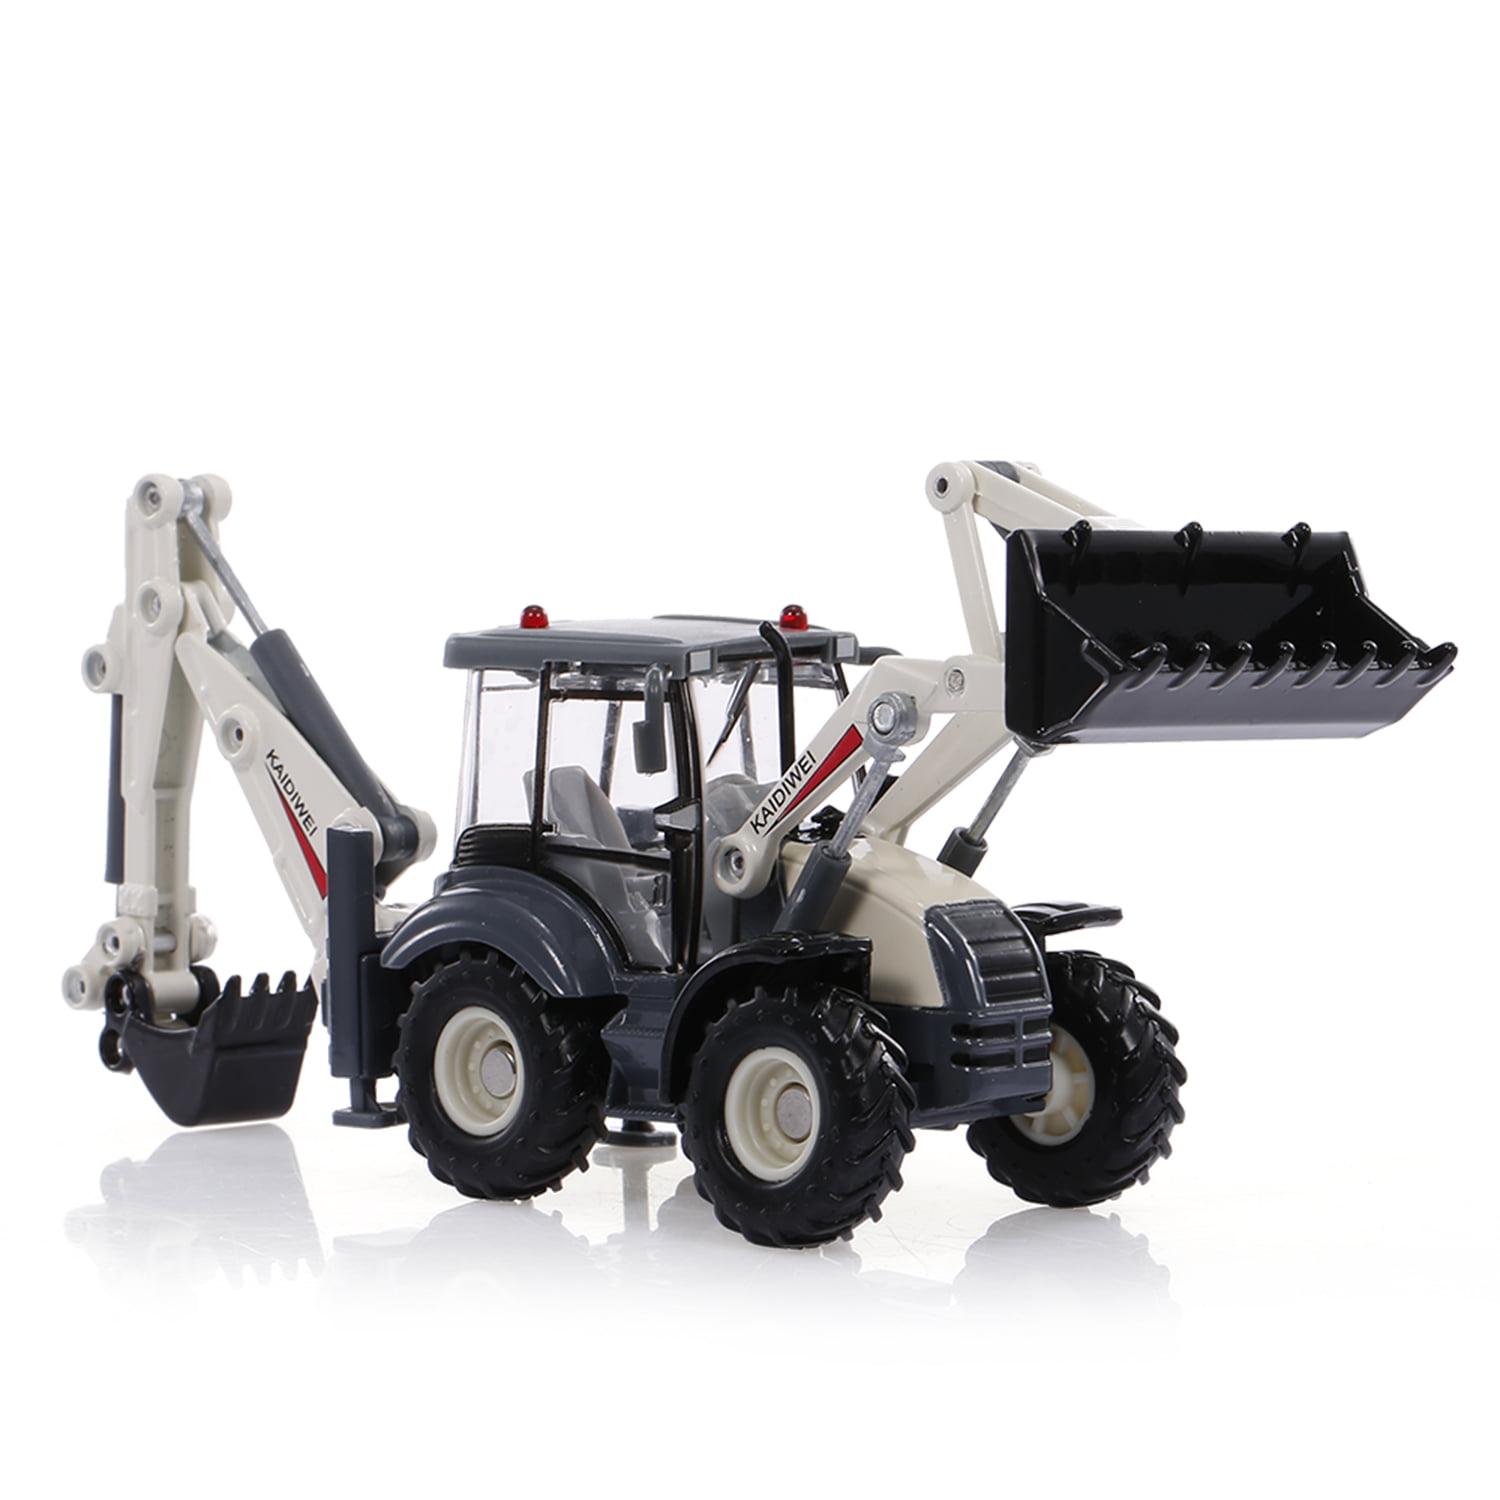 1:50 Scale Alloy Diecast Excavator Toy Toy Vehicle Tractor Model Alloy Excavator 